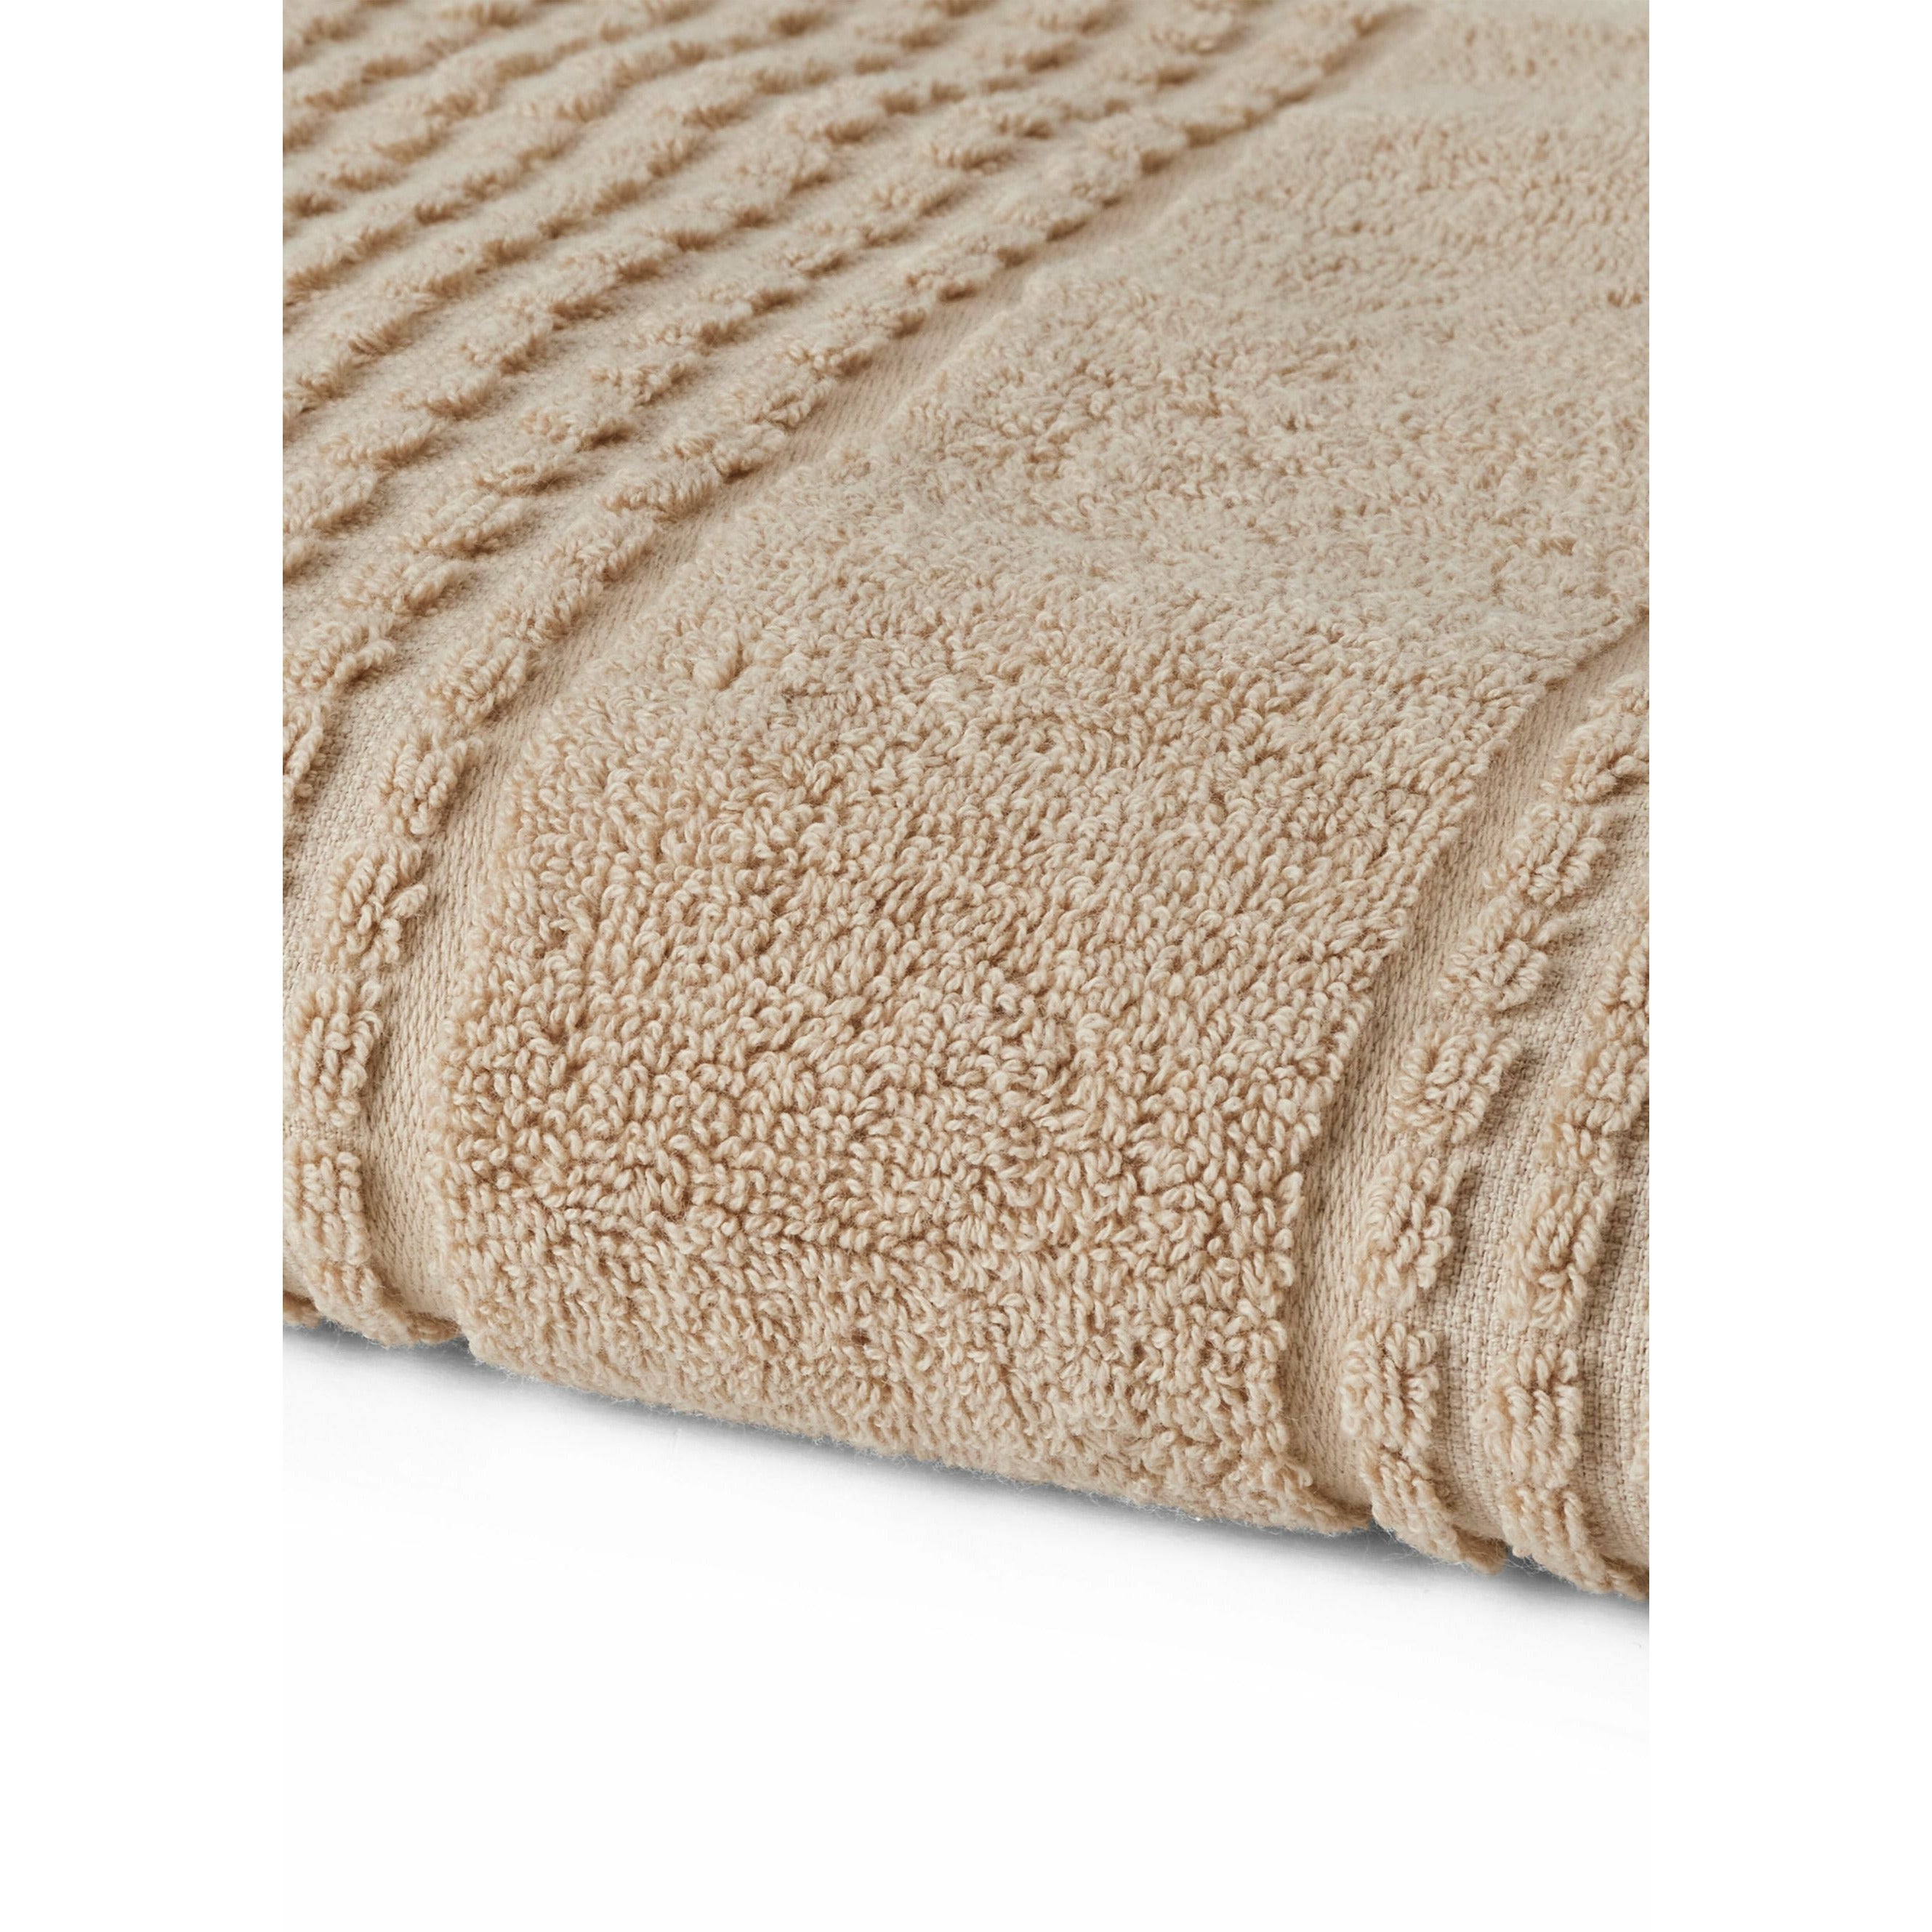 Juna Check Towel 50x100 Cm, Sand